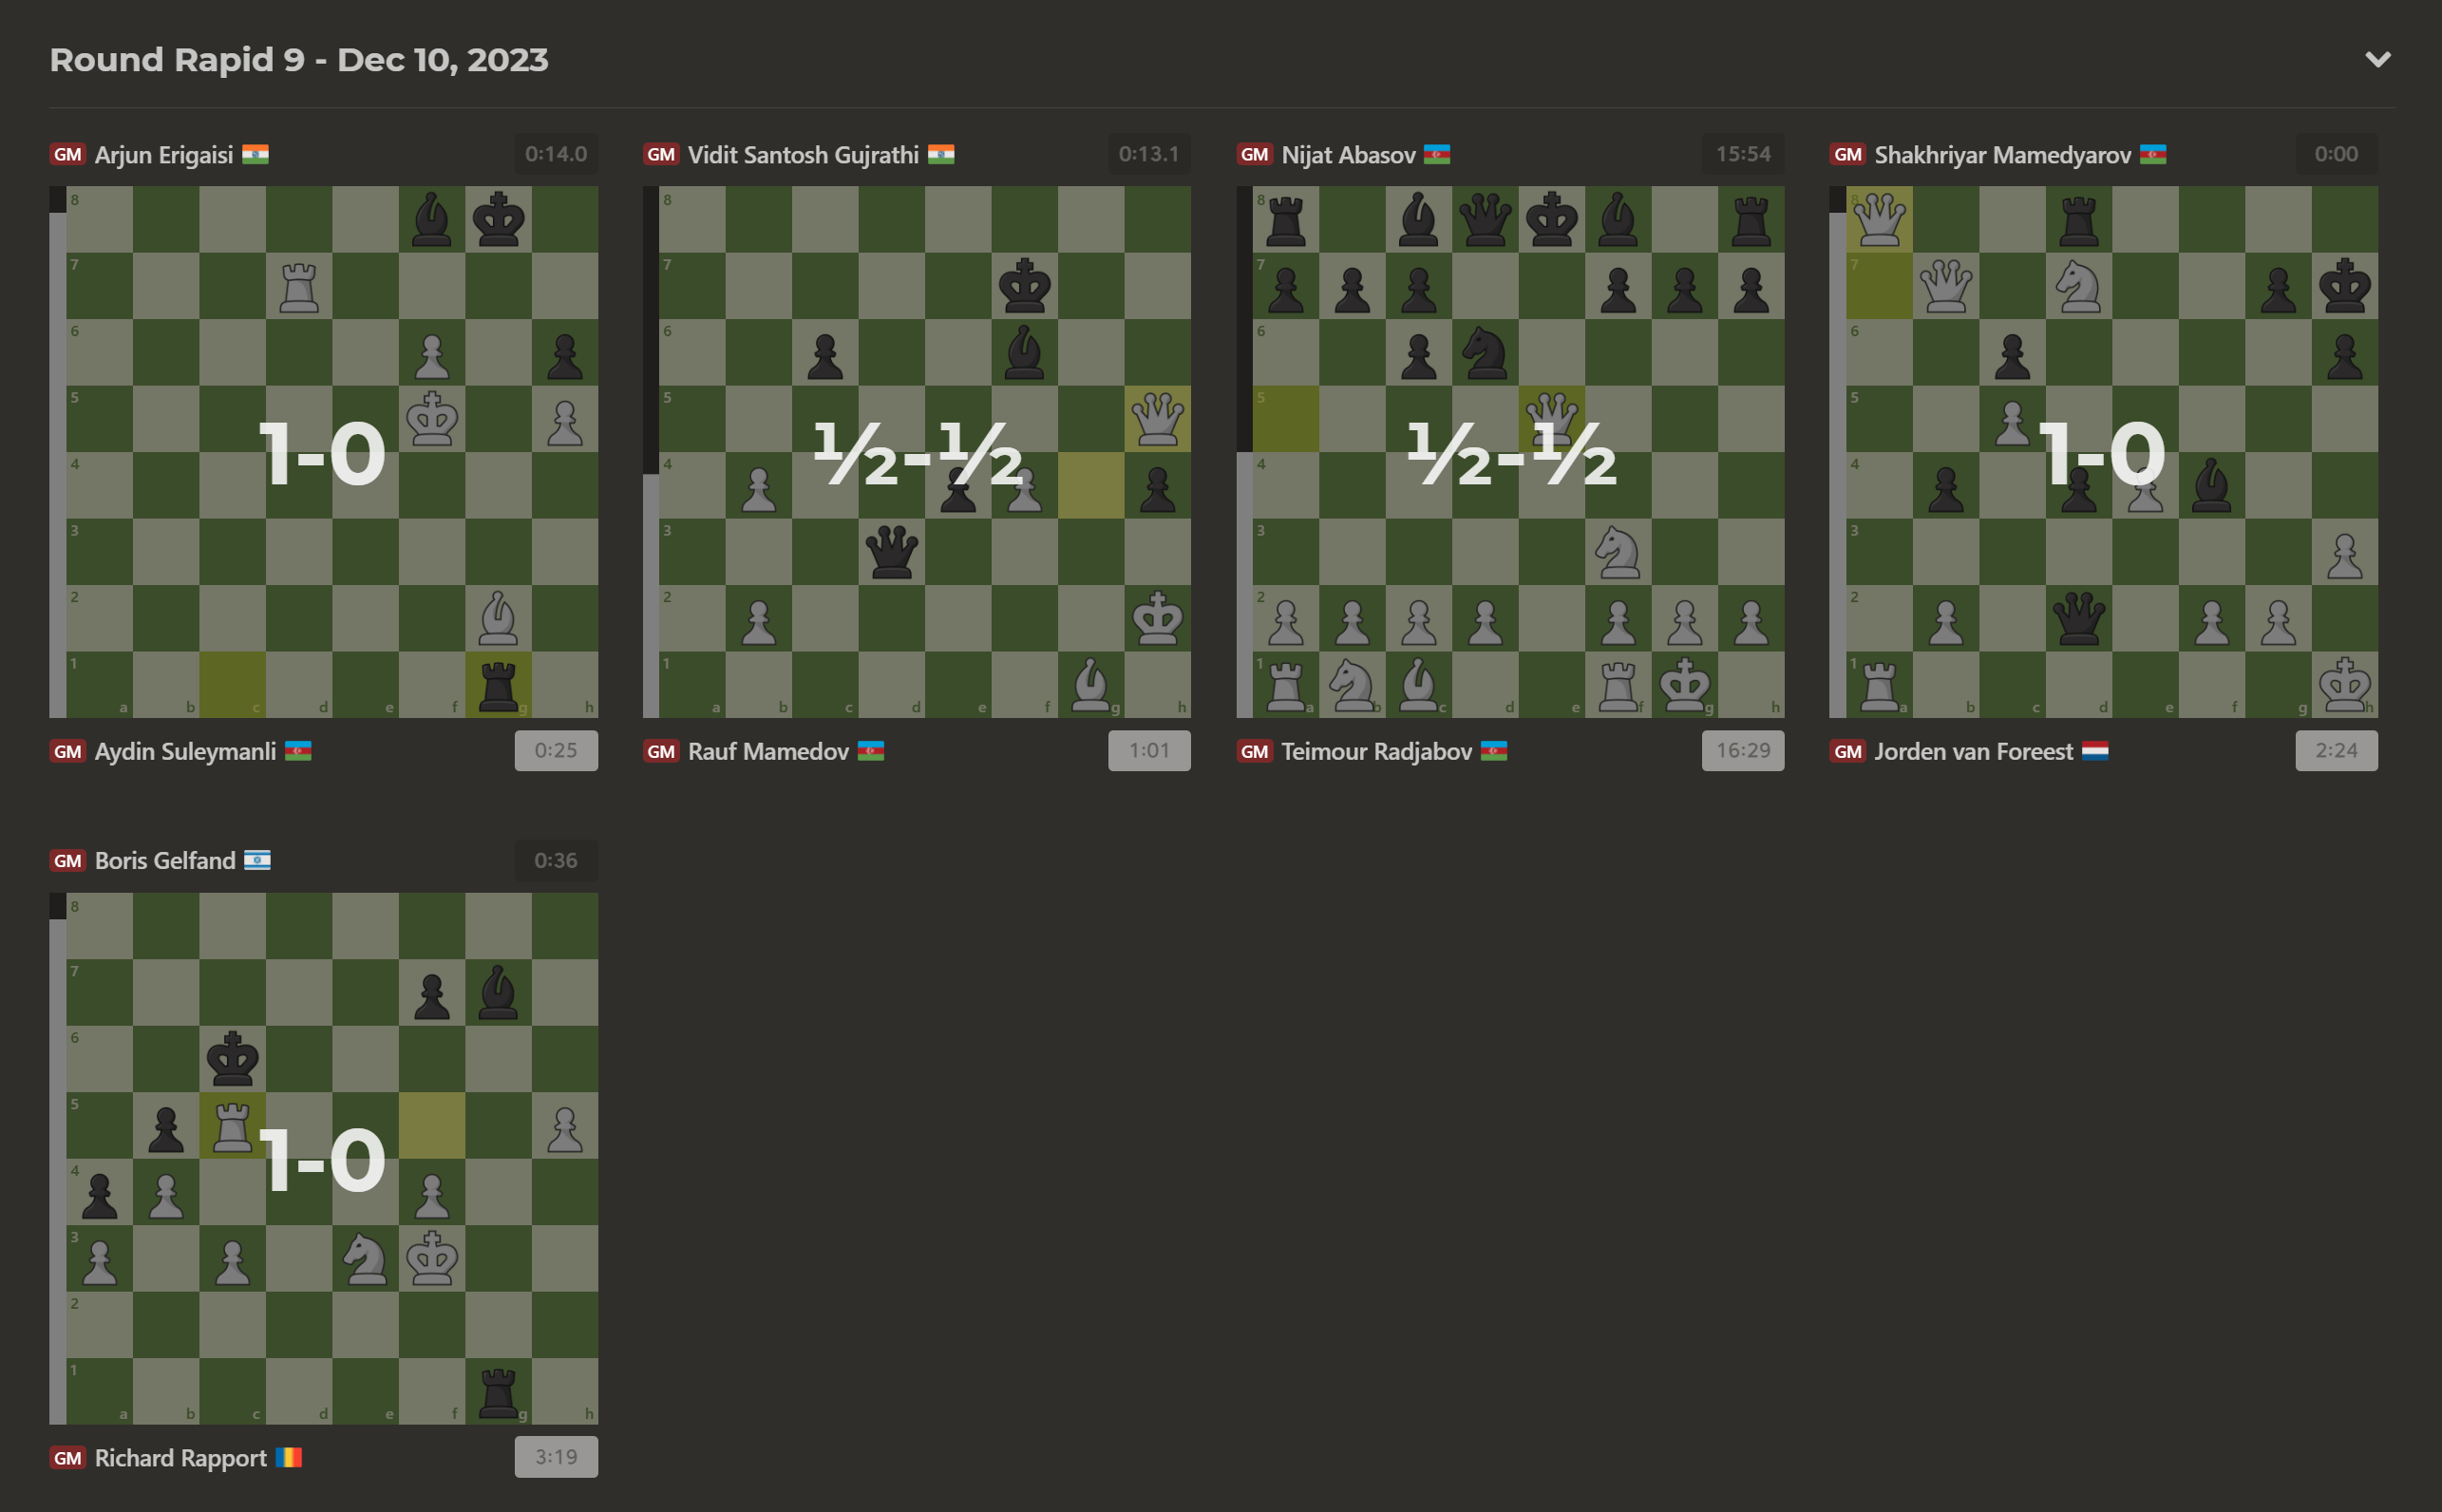 ChessBomb Blog: Round 6 of Vugar Gashimov Memorial - Shamkir Chess 2015